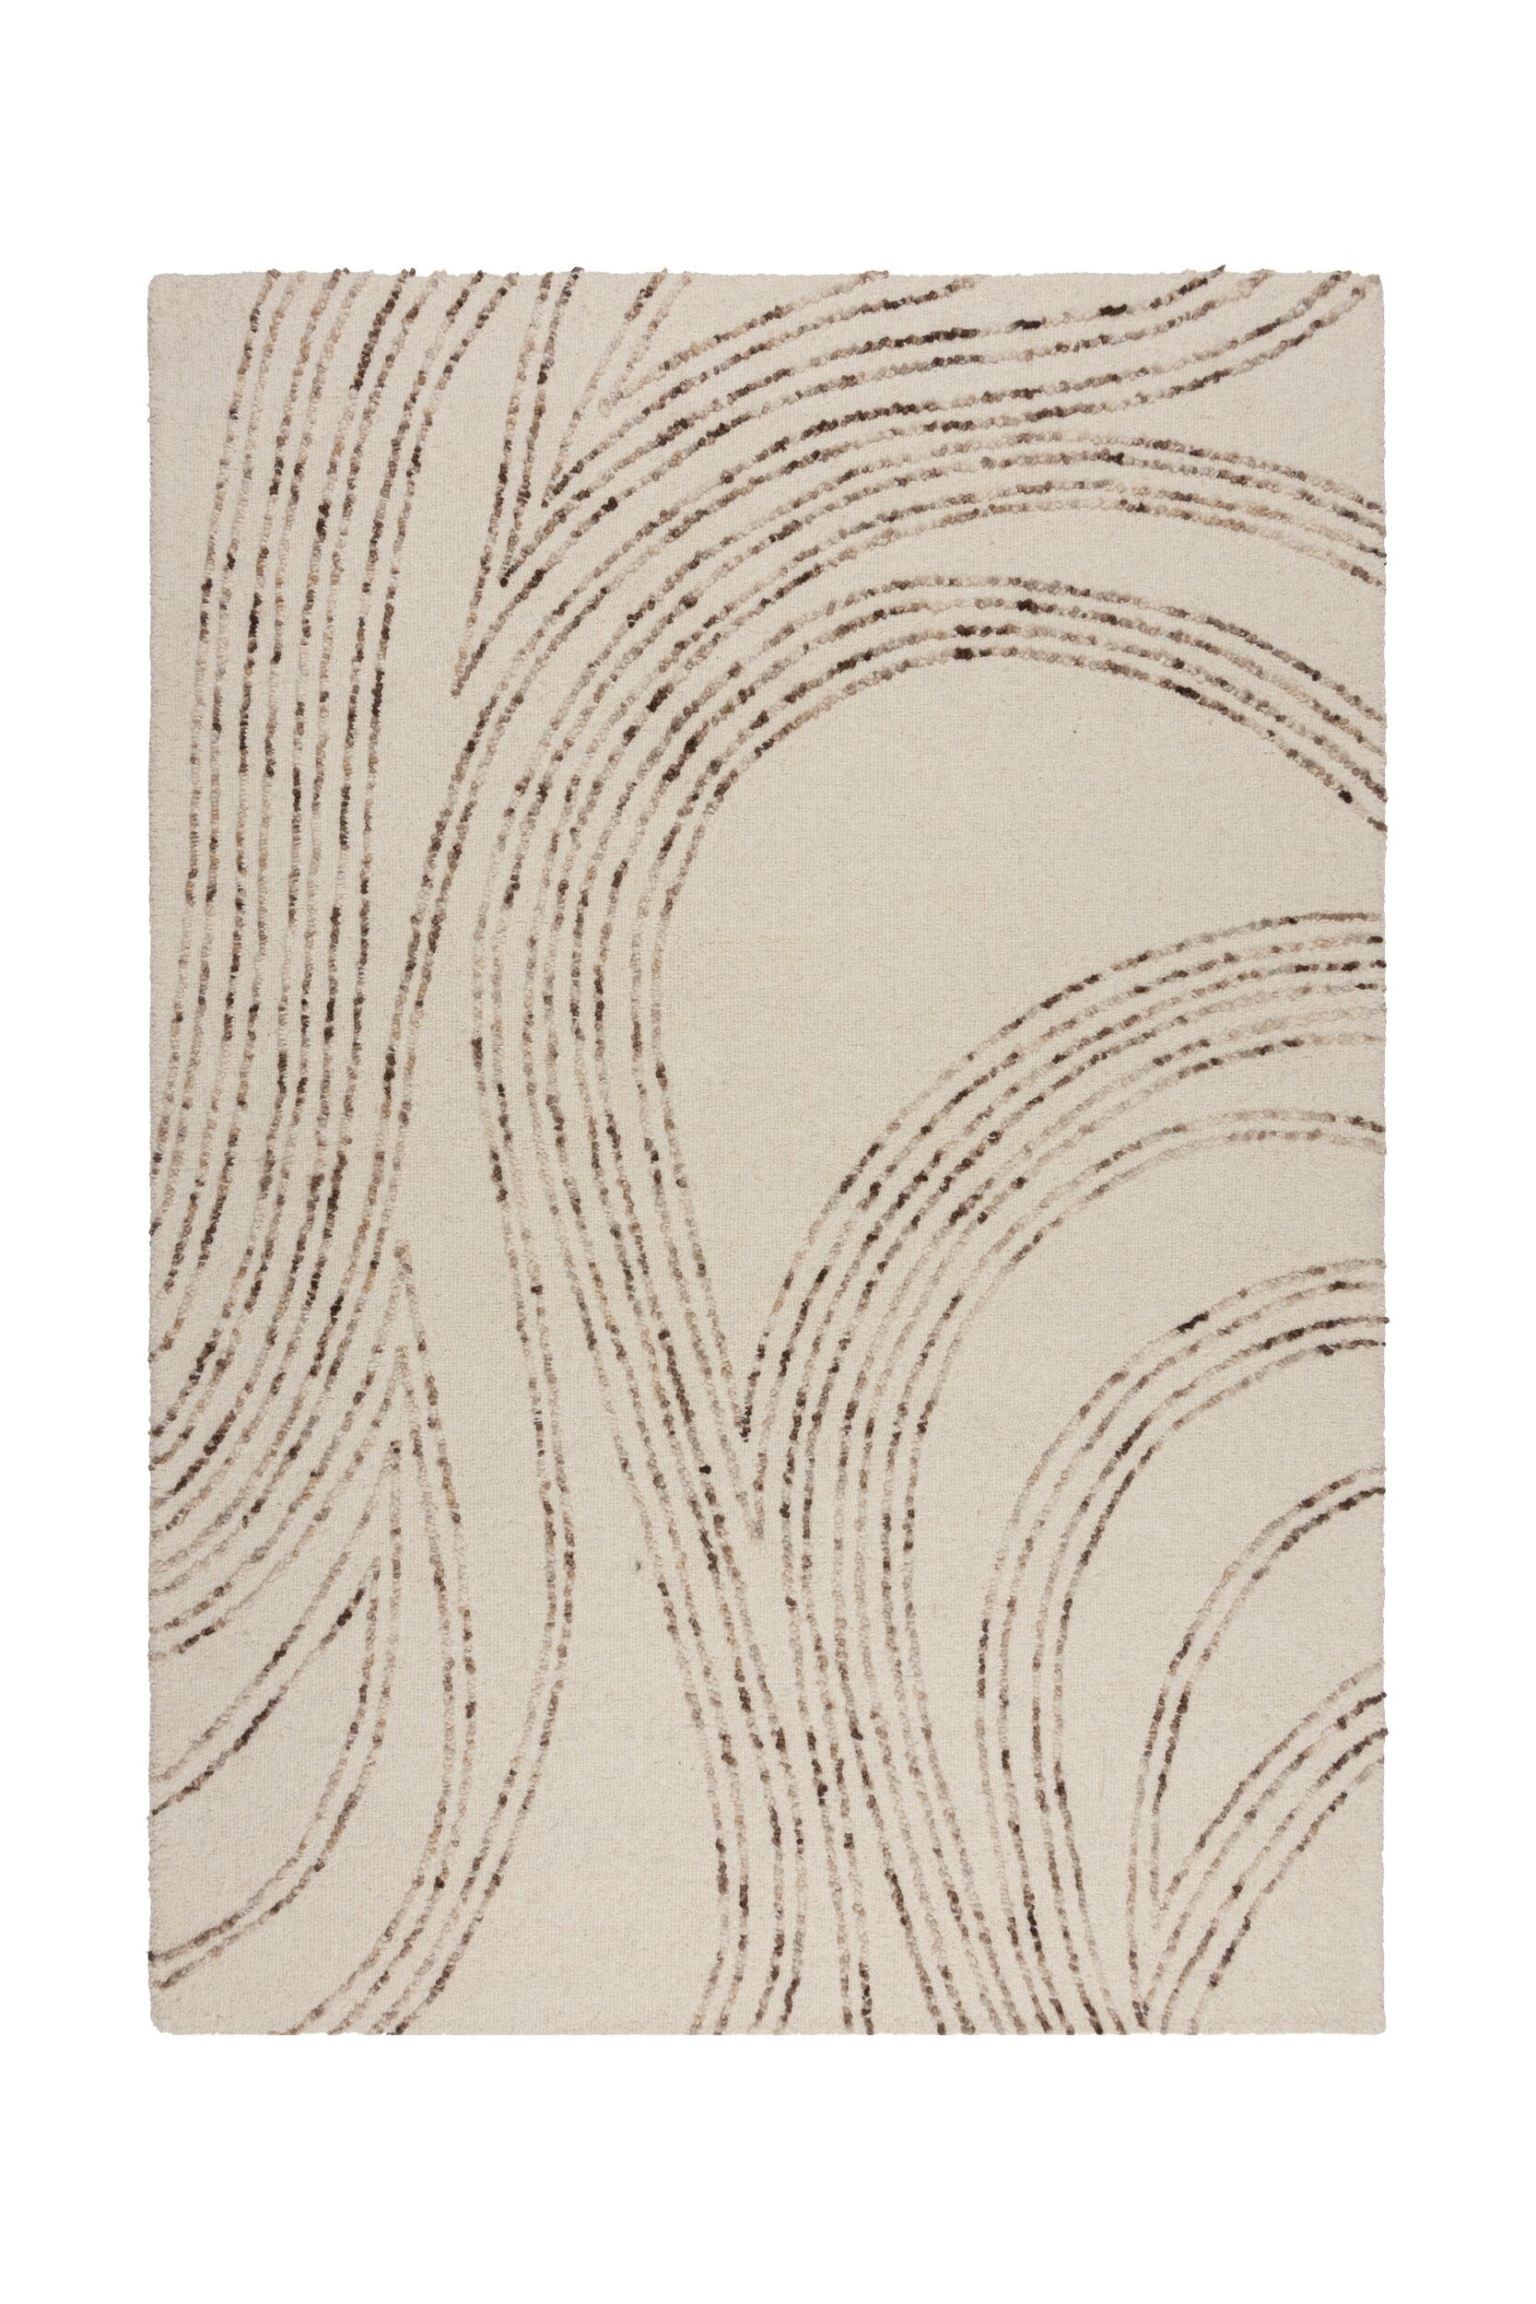 Flair Rugs Шерстяной Ковер Abstract Swirl - Натуральный/коричневый 1253679001 1253679001